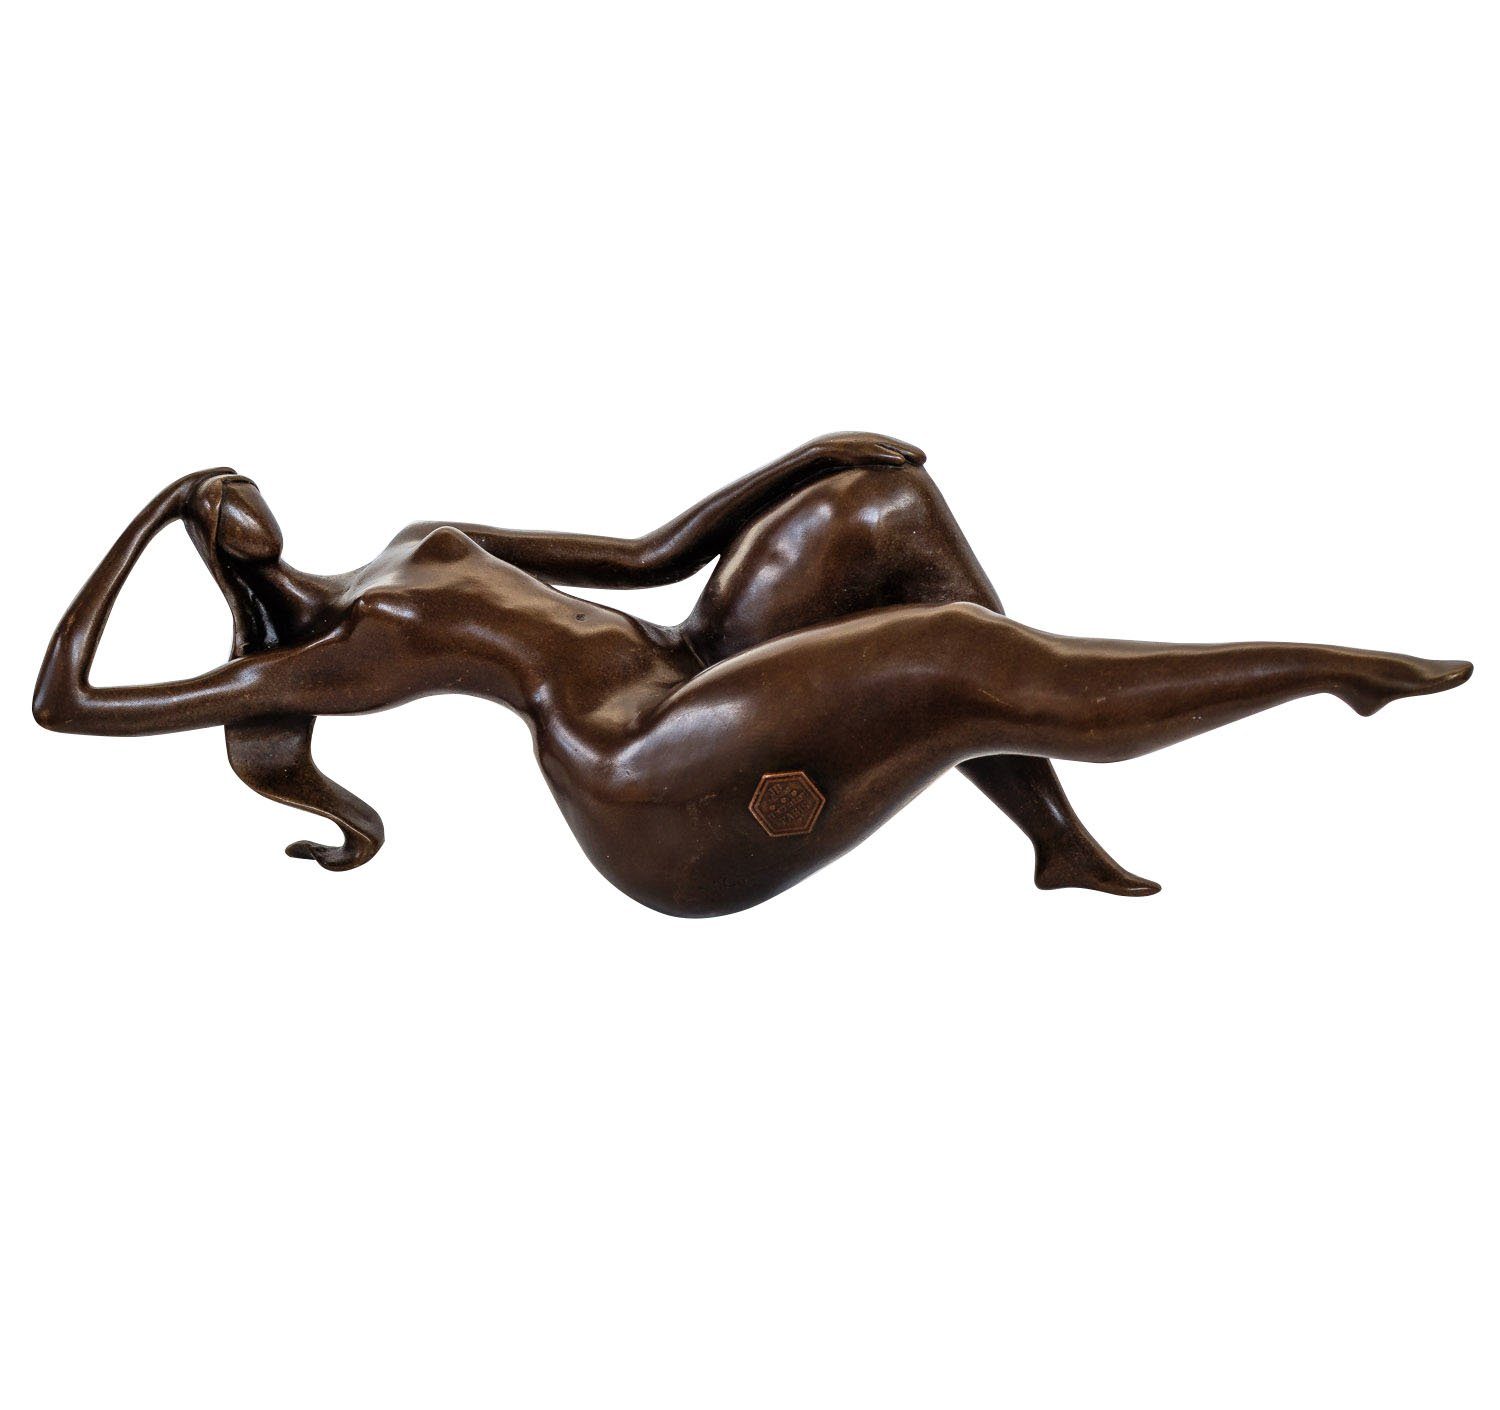 Aubaho Skulptur Bronzeskulptur Frau Erotik erotische Kunst Antik-Stil Bronze Figur Sta